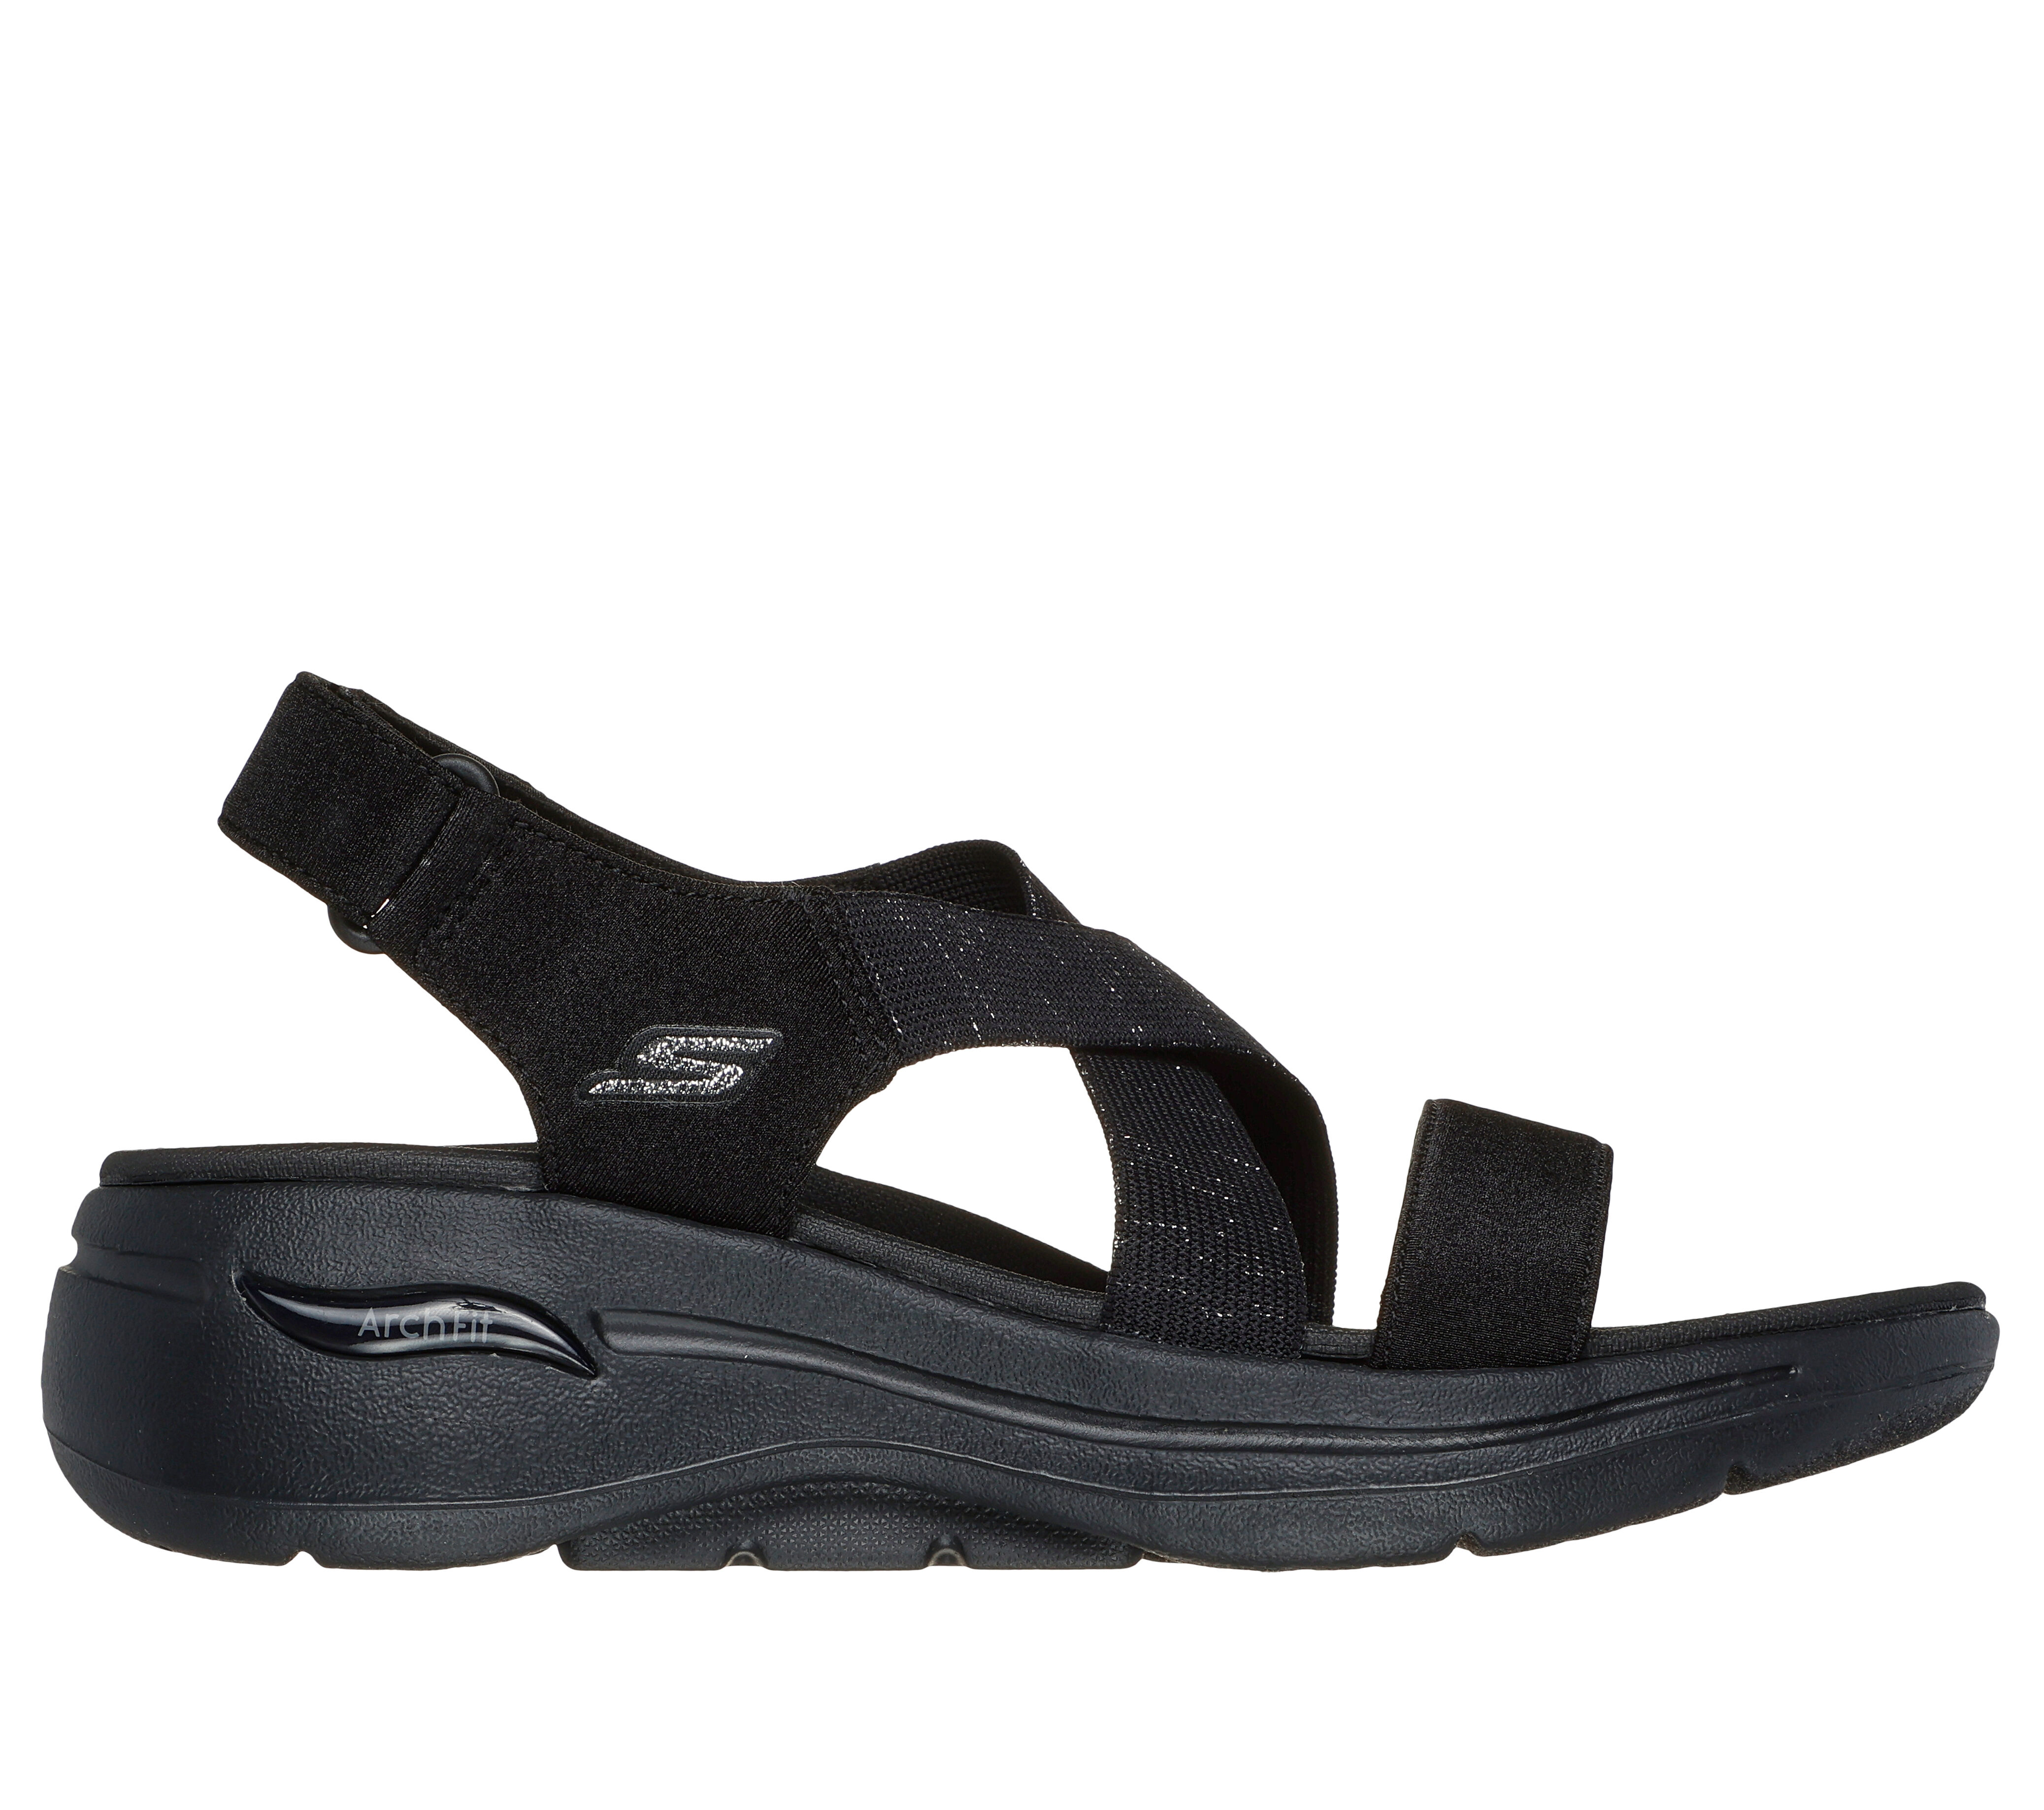 skechers sandals size 8